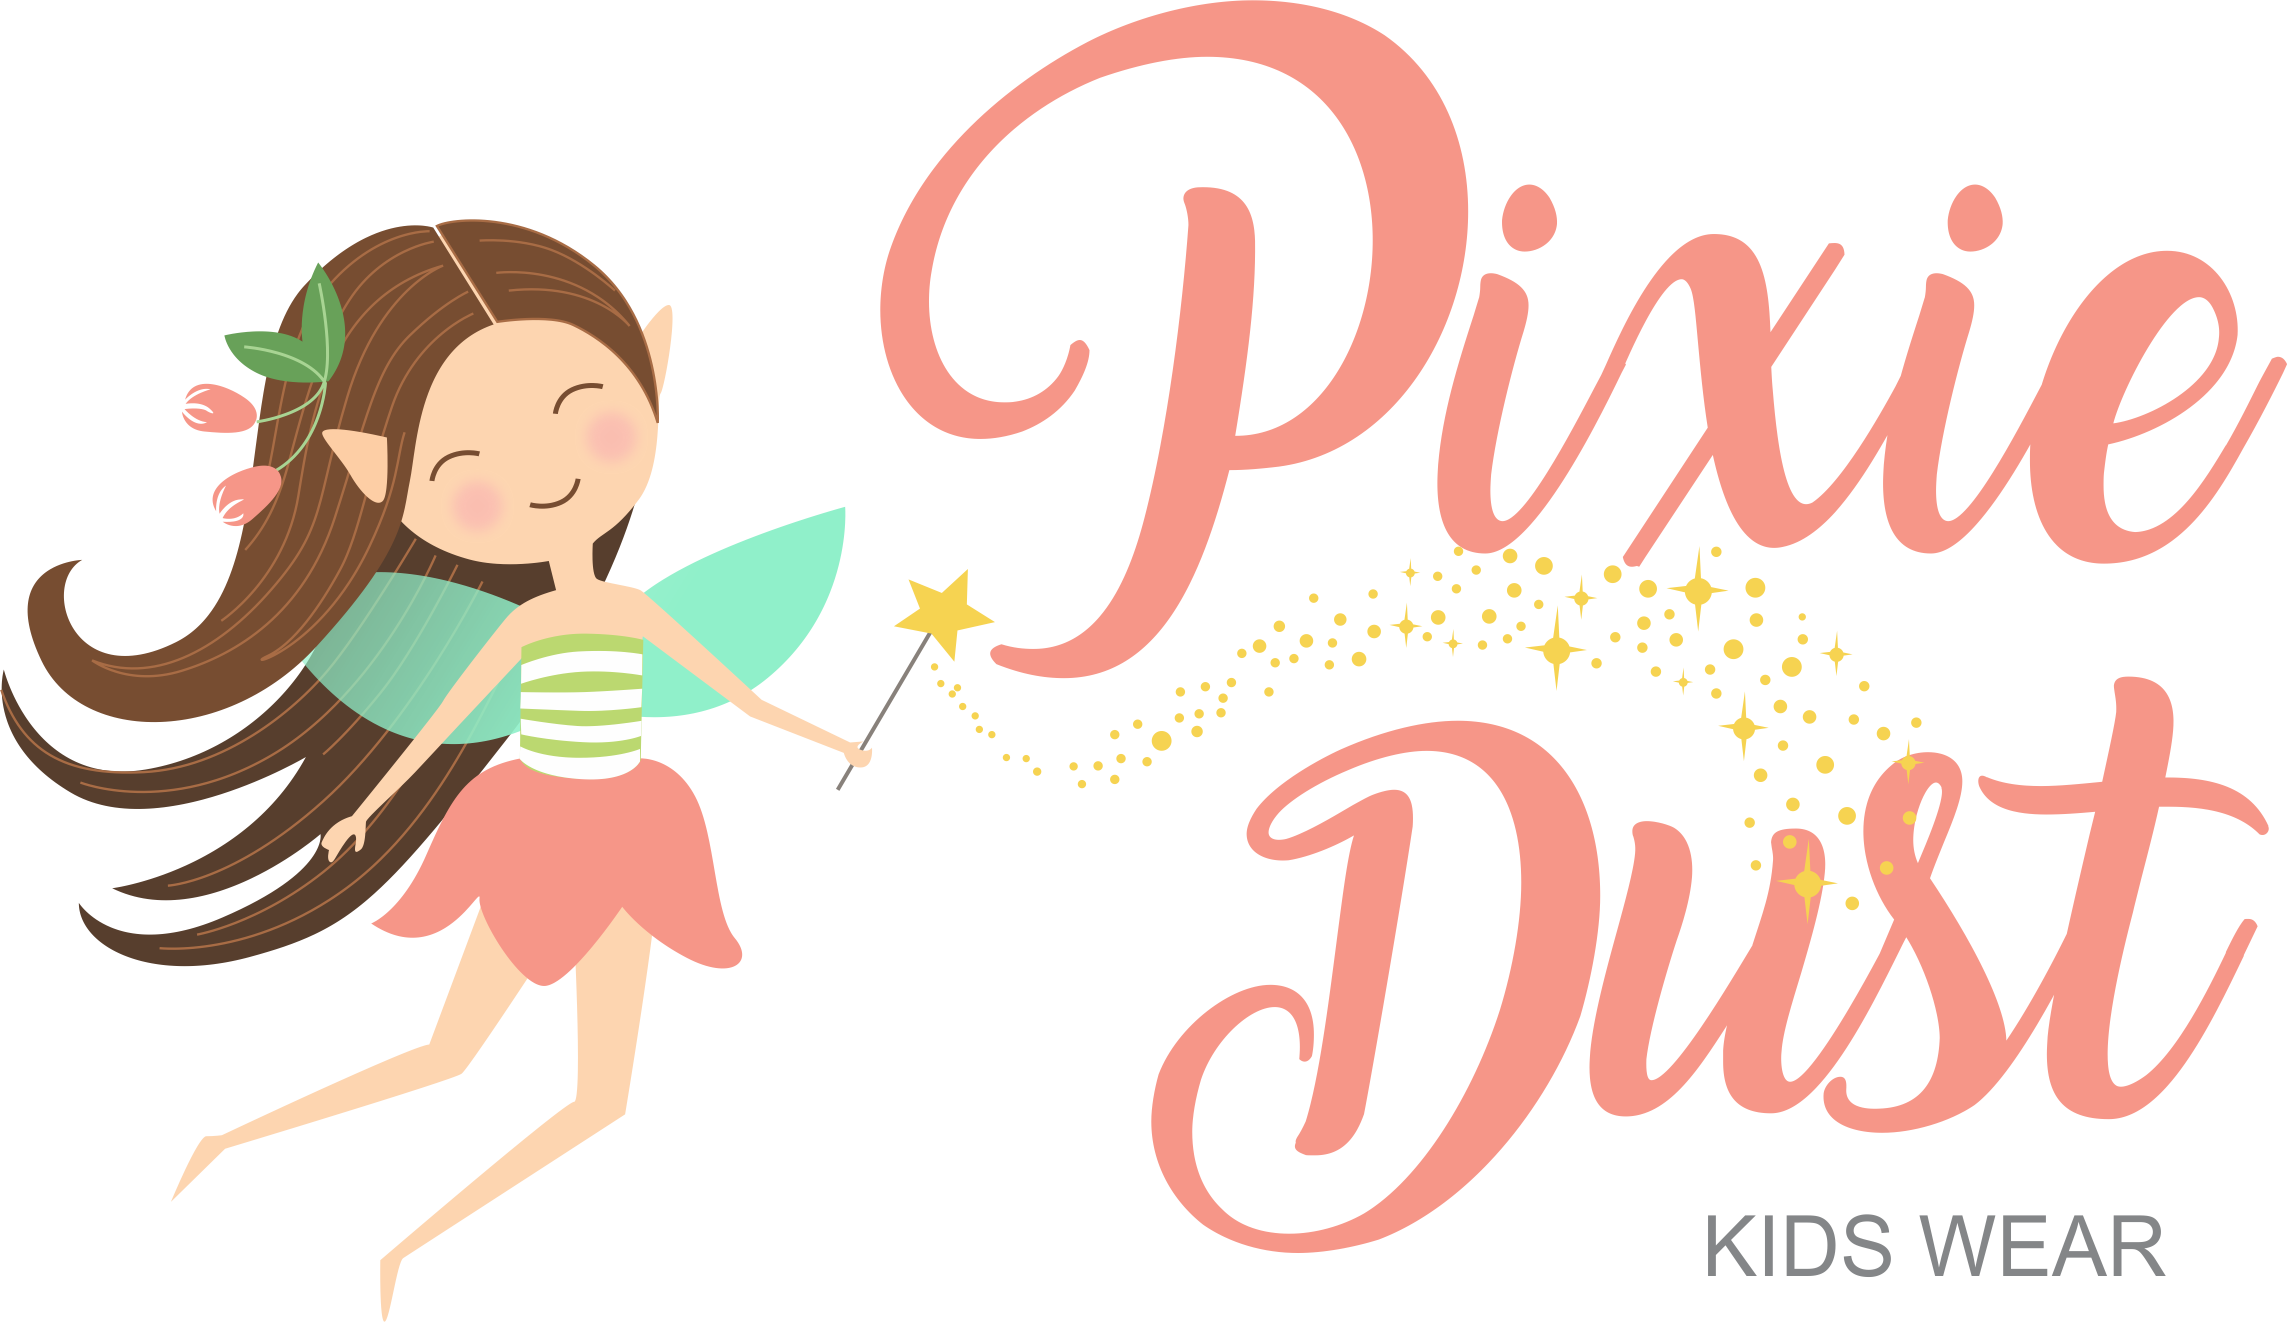 Pixie Dust Clothing